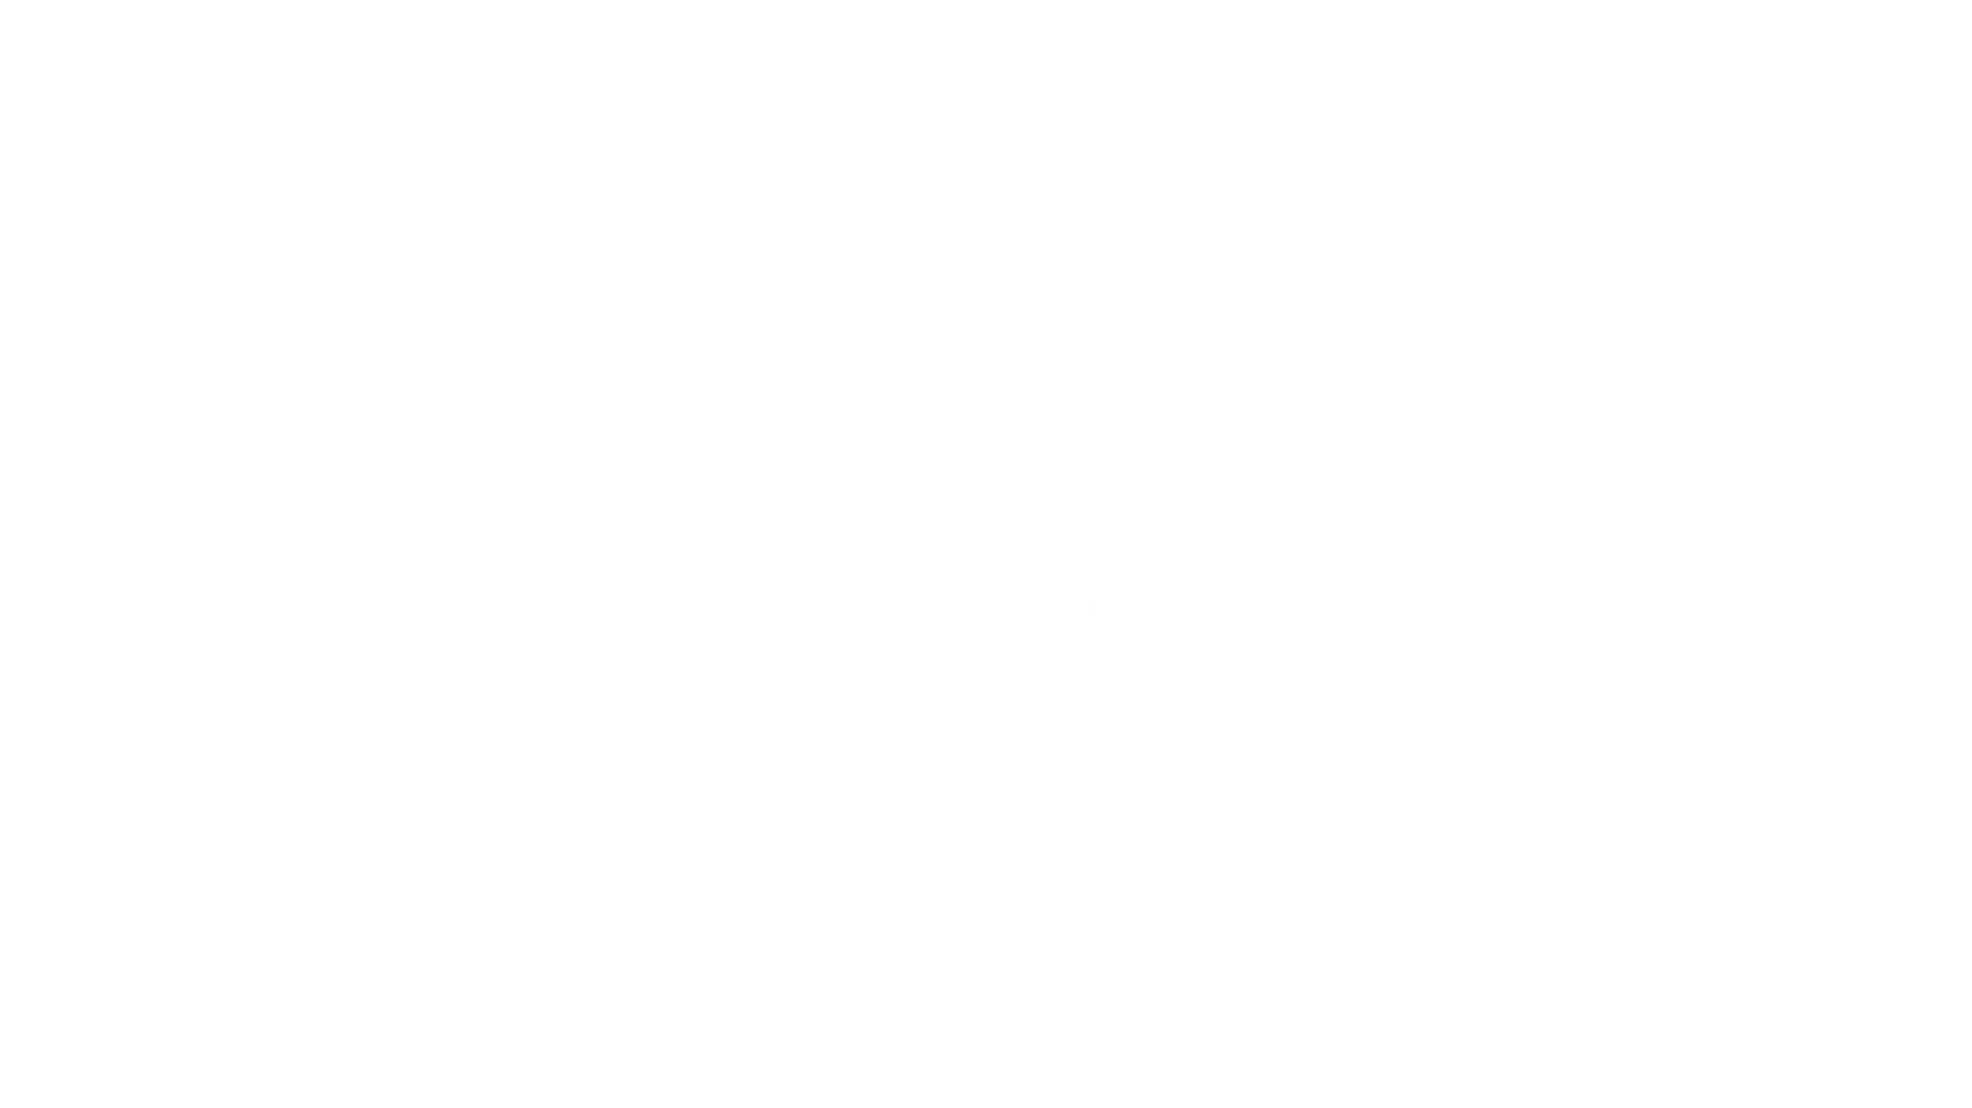 White_dots